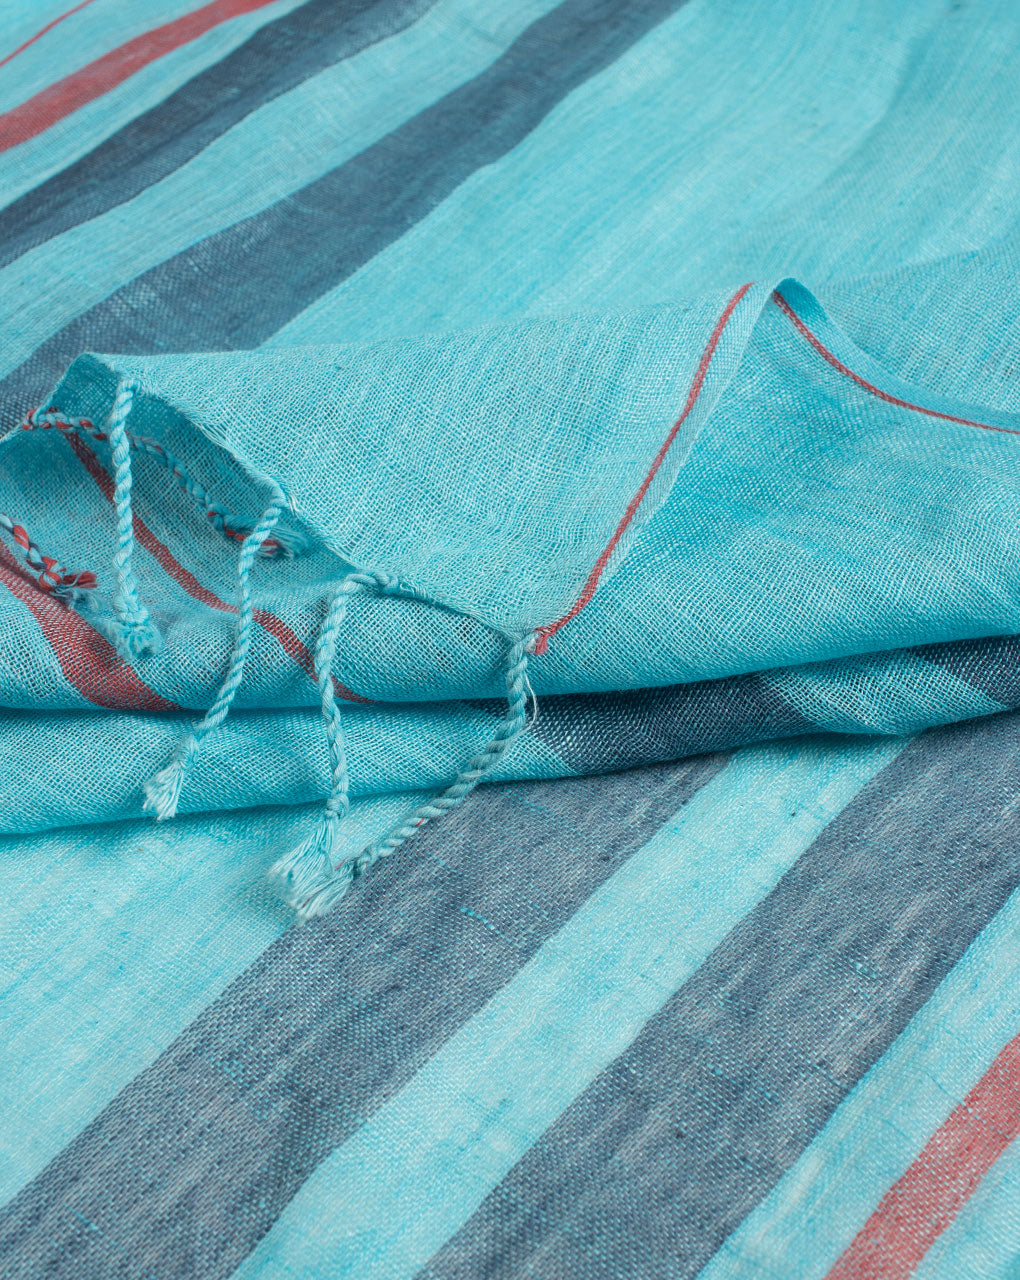 Turquoise Stripes Woven Bhagalpuri Cotton Stole - Fabriclore.com